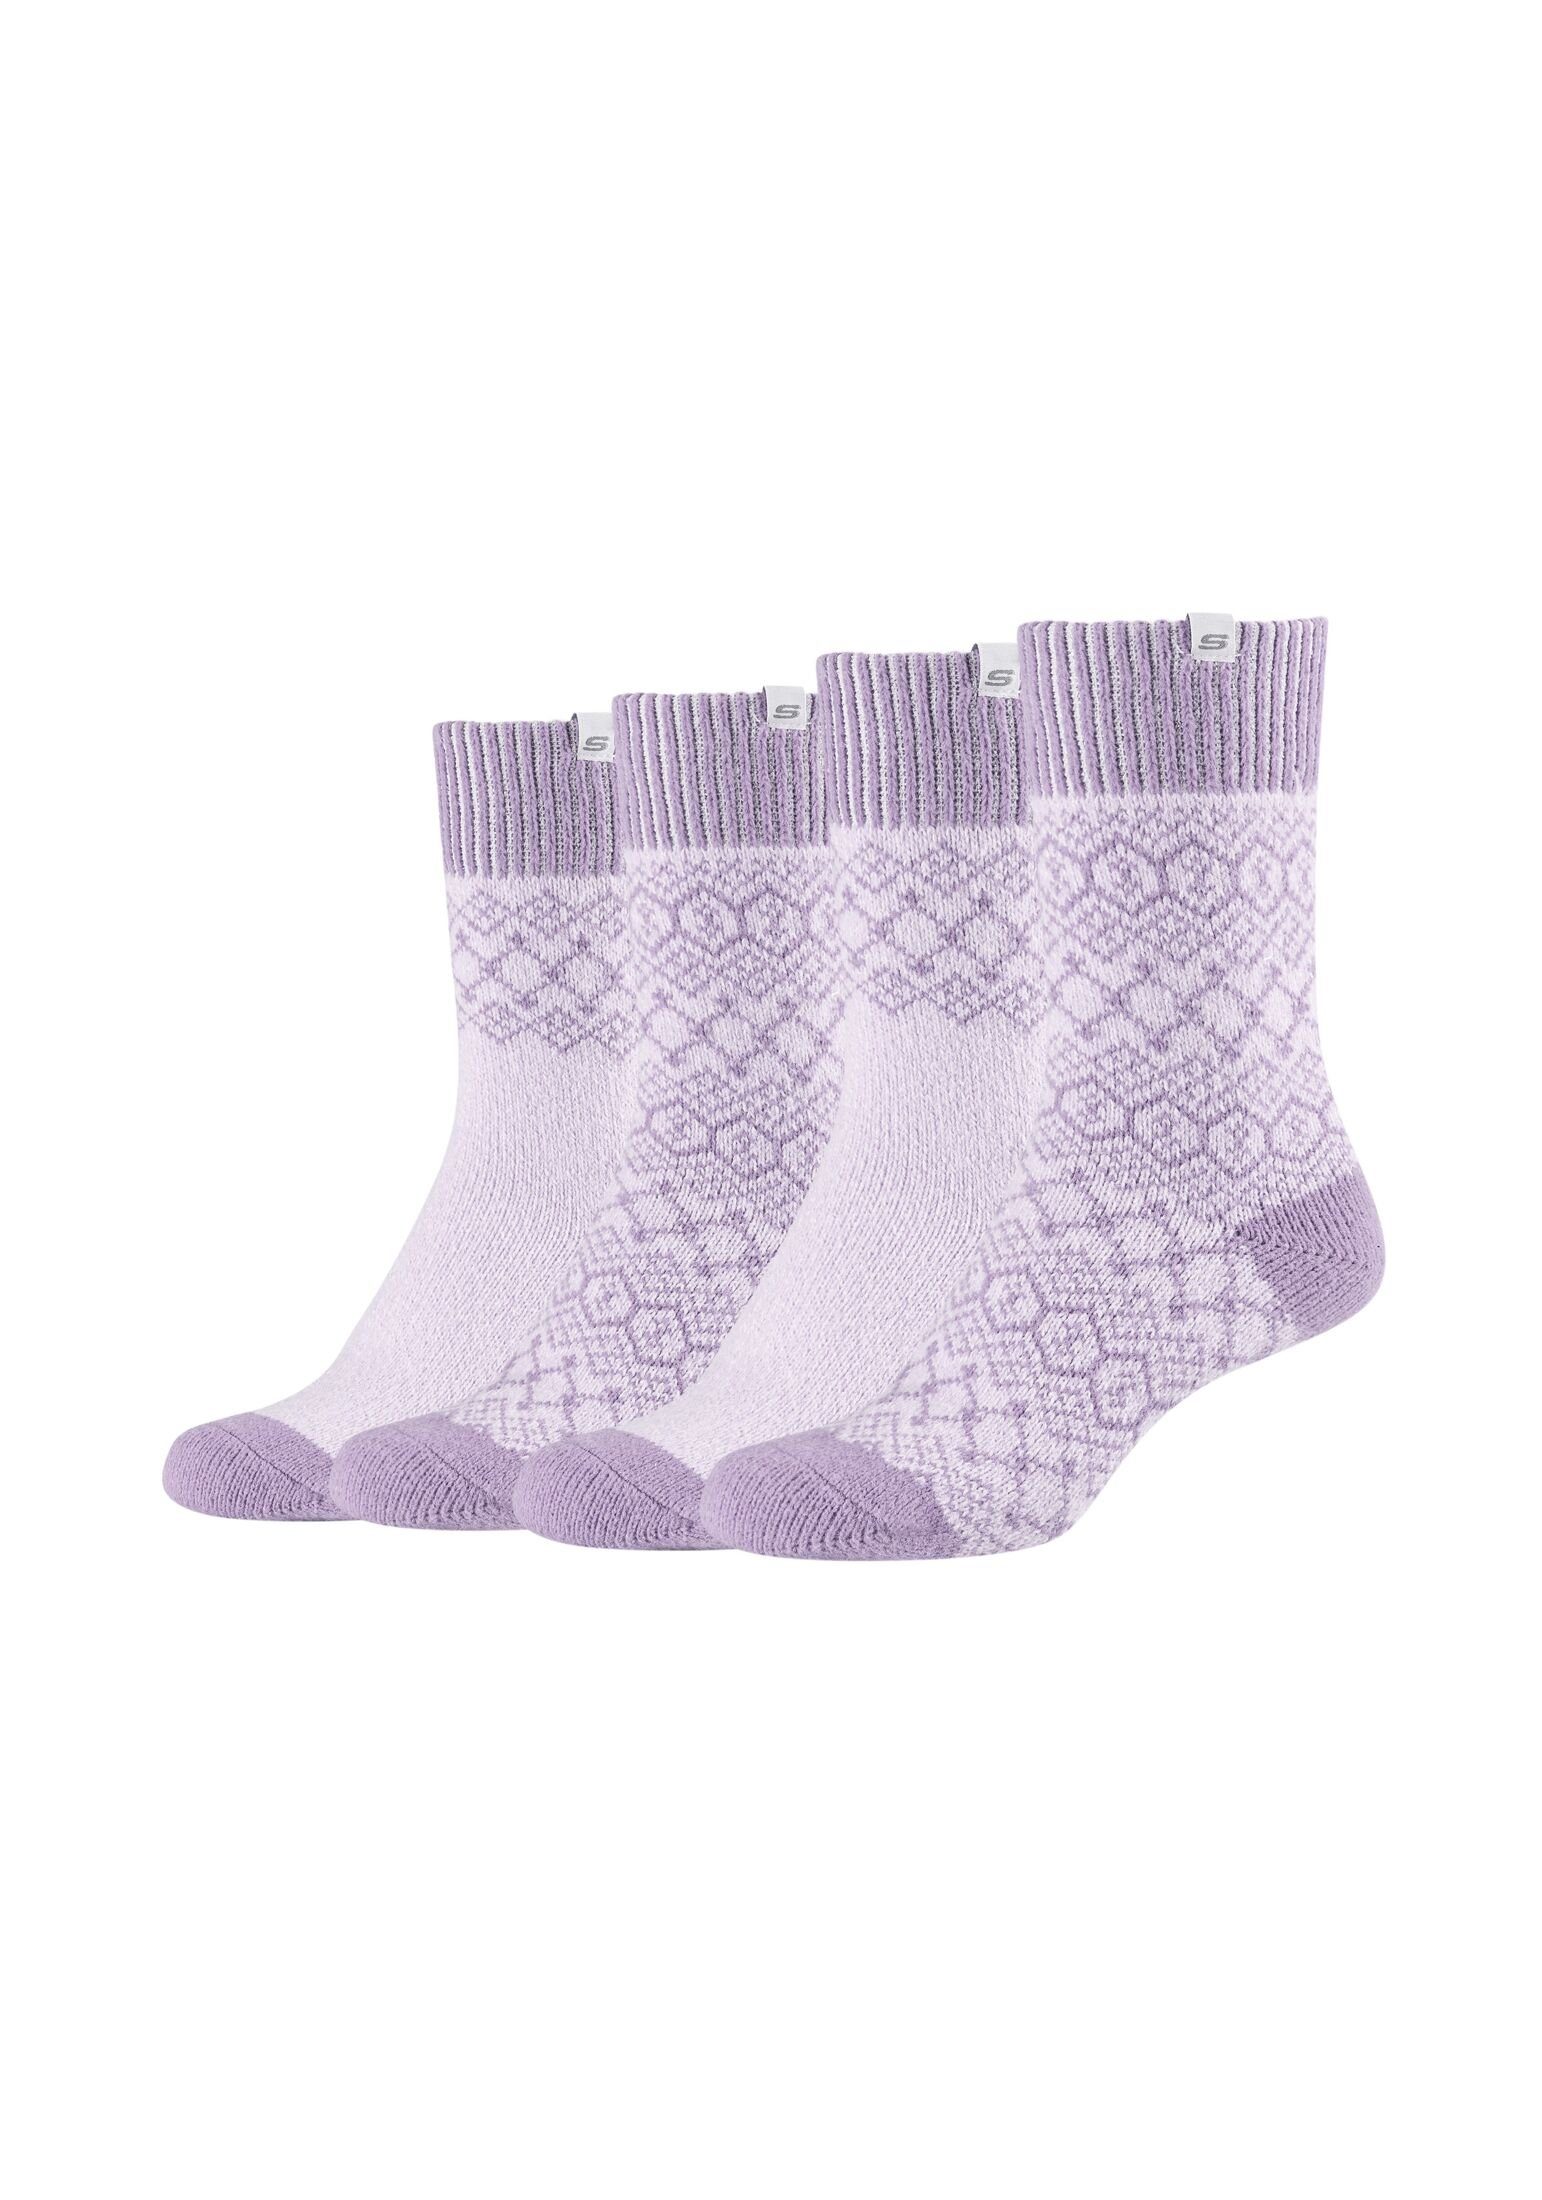 Lila Socken online kaufen | OTTO | Lange Socken